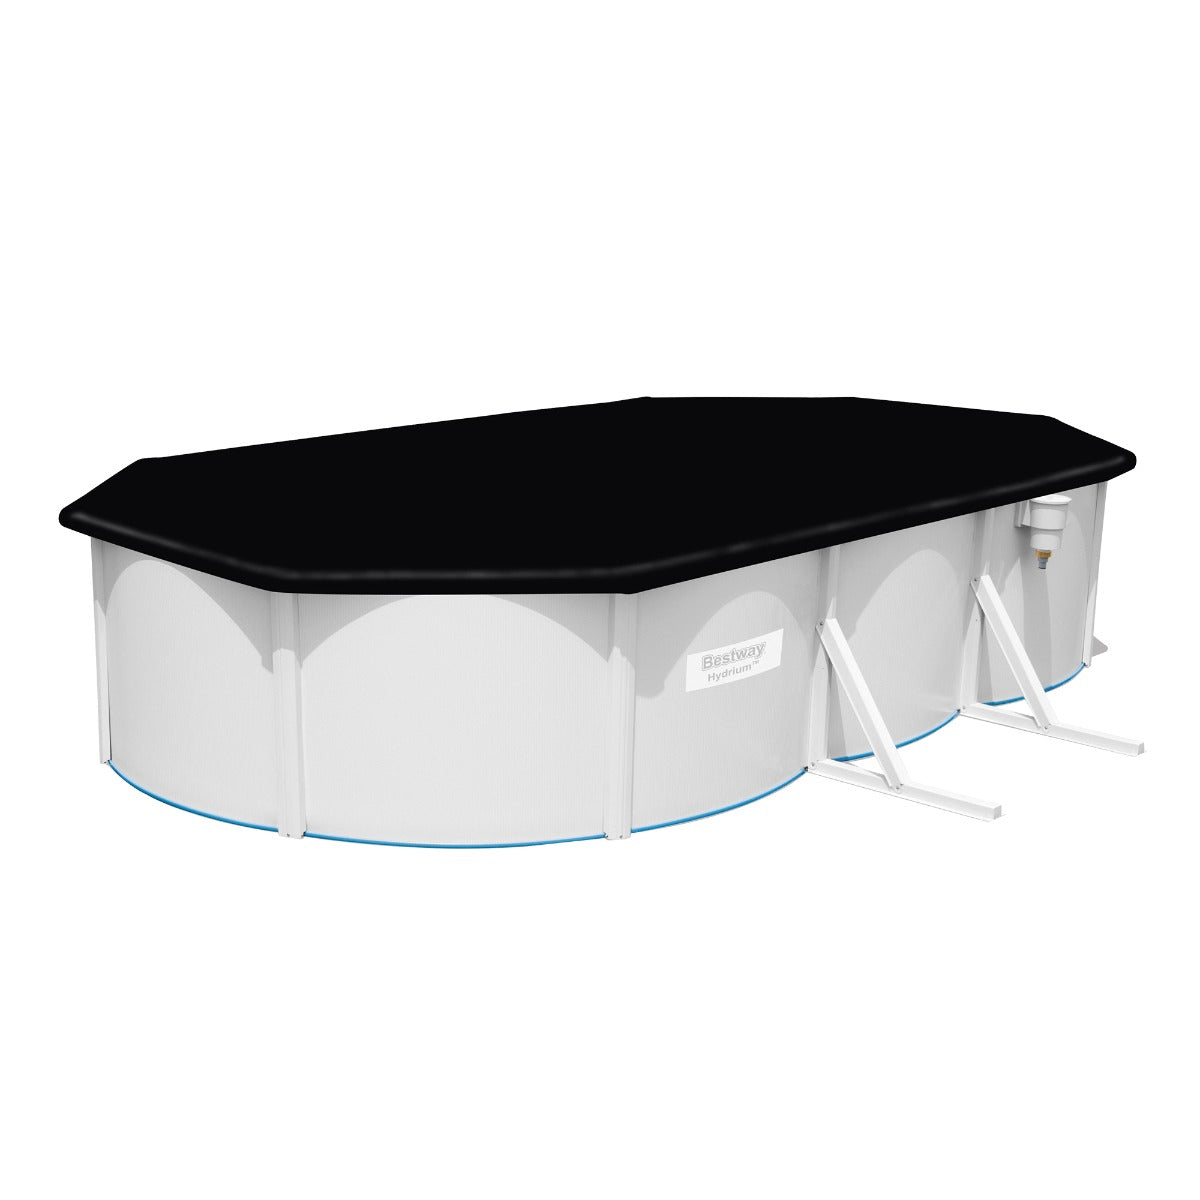 Bestway Hydrium™ Oval Above Ground Pool Sand Filter Kit - 6.10m x 3.60m x 1.20m